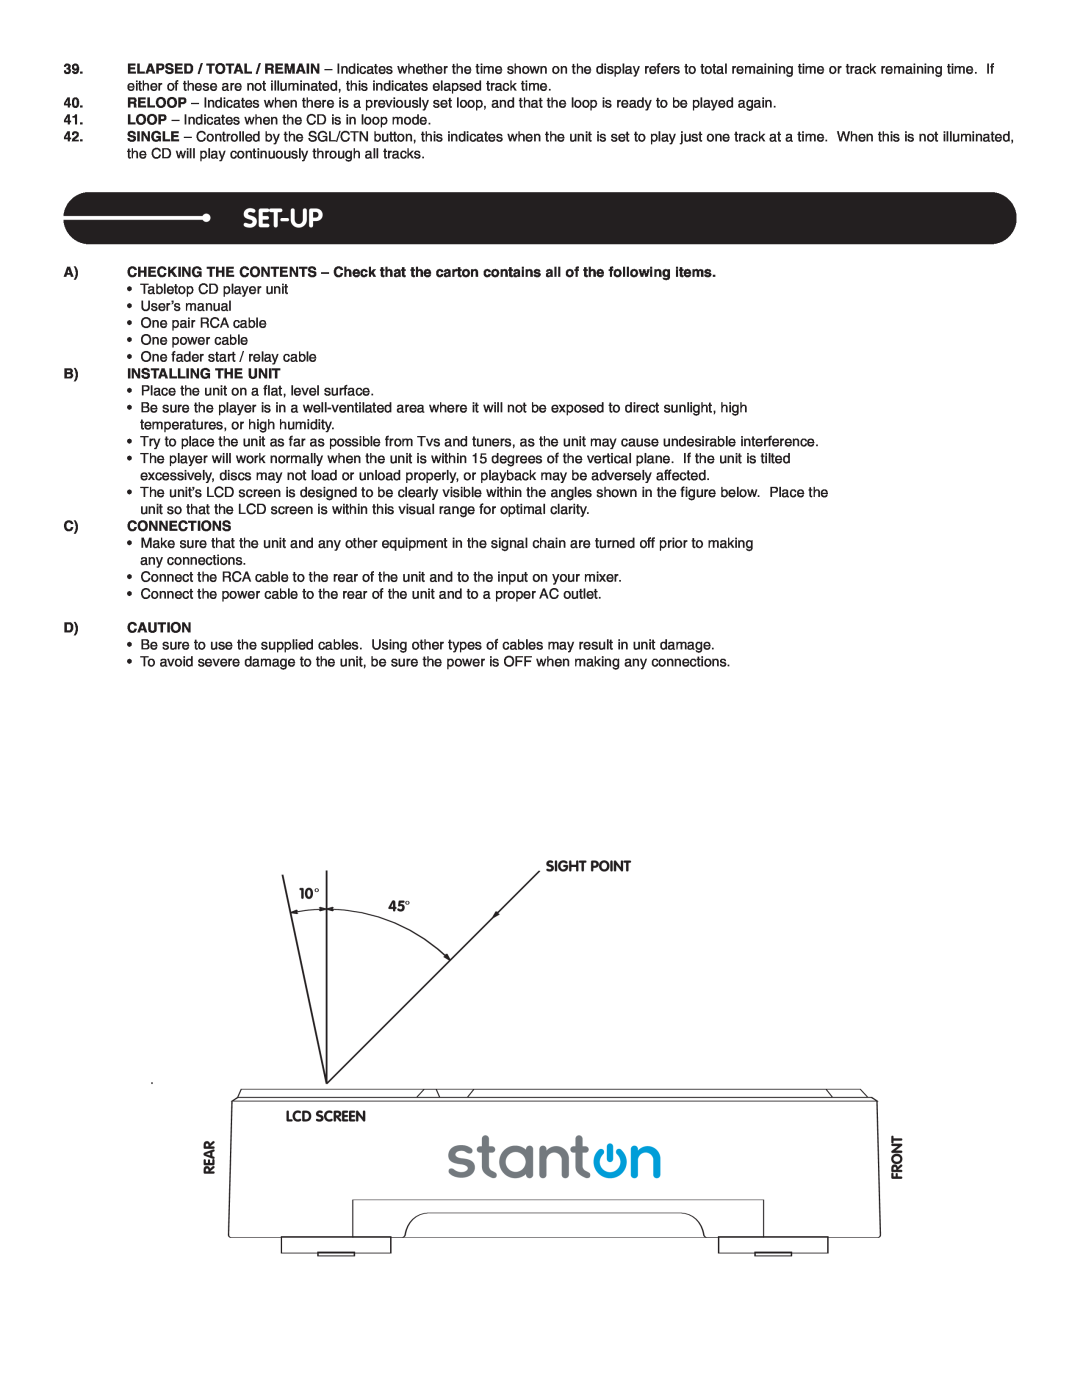 Stanton C.303 manual Set-Up, Binstalling The Unit, Cconnections, Dcaution 